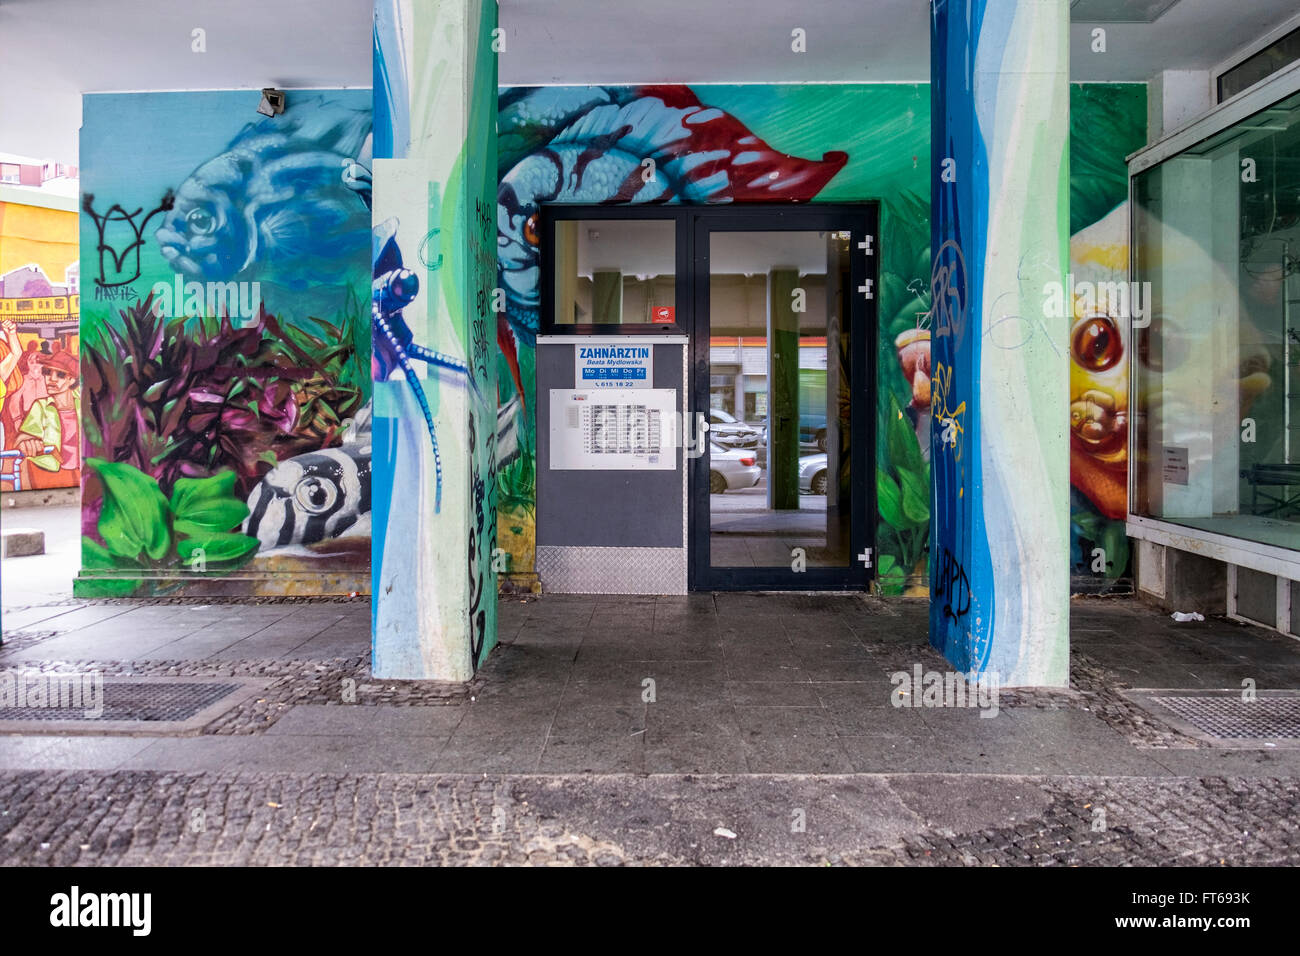 Berlin Kreuzberg Street art. Entrance to dental practice with mural art and graffiti Stock Photo